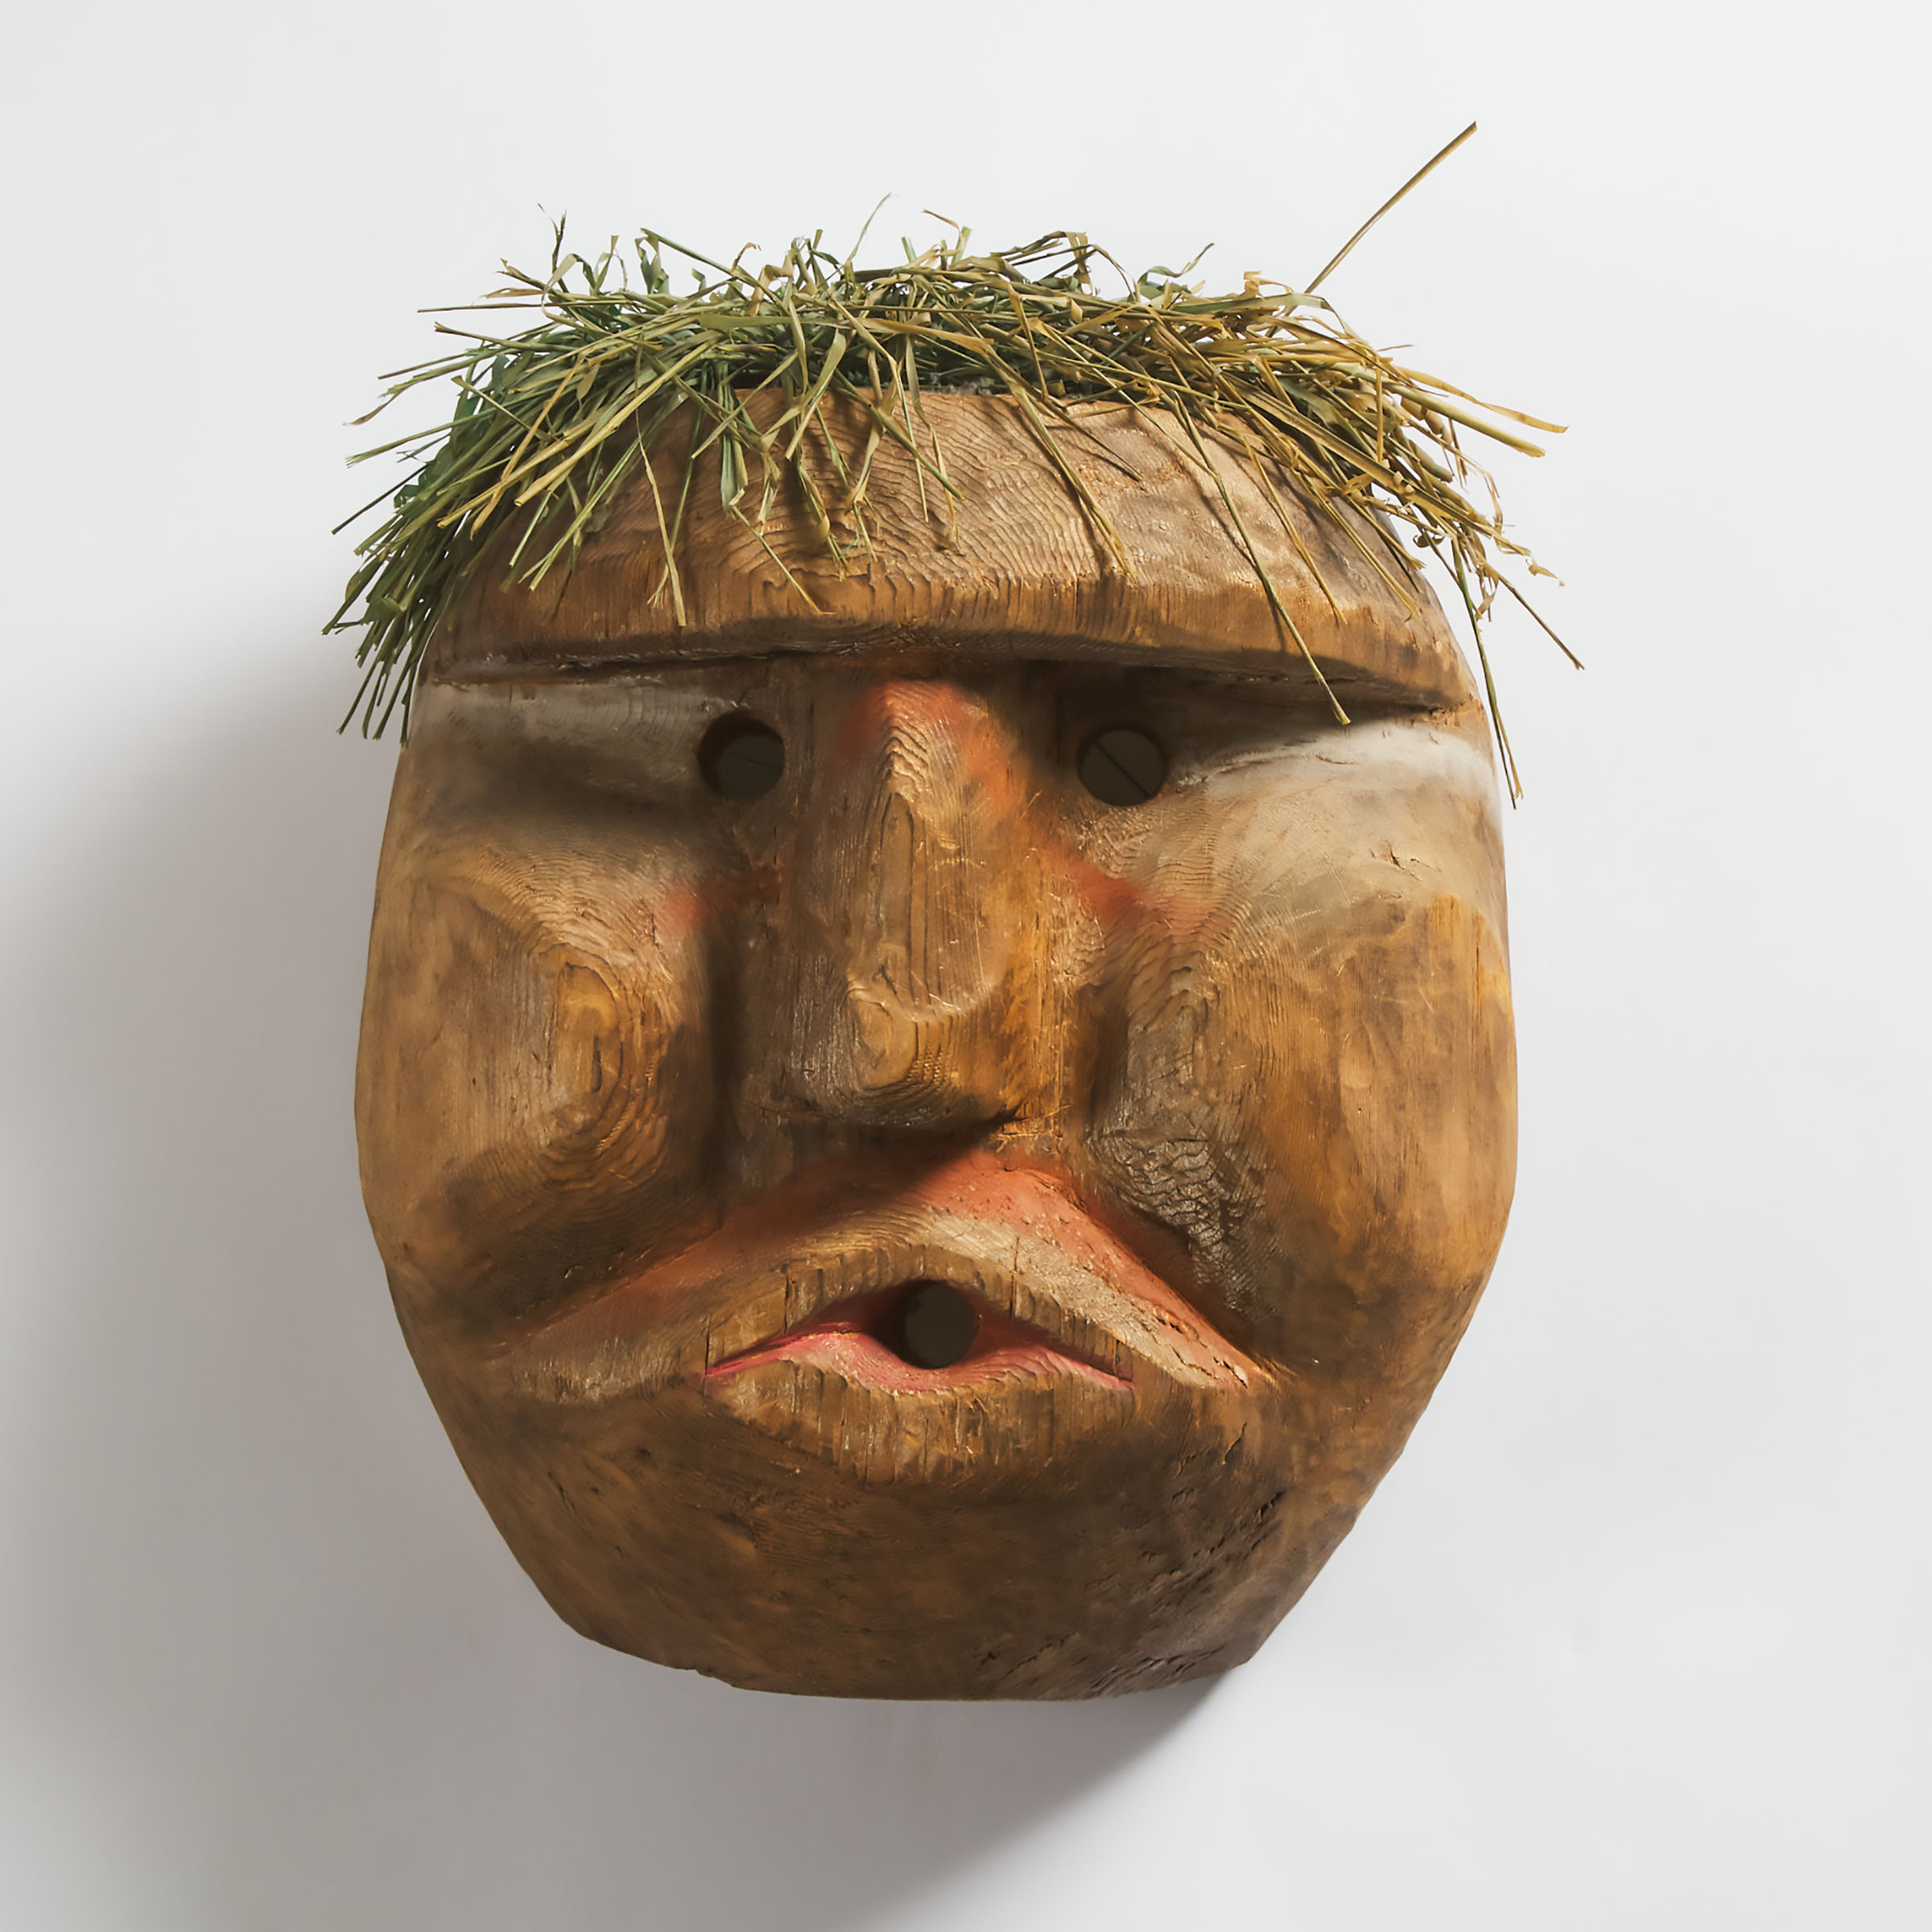 Kelly Peters Mask, Nootka, Northwest Coast, 20th century